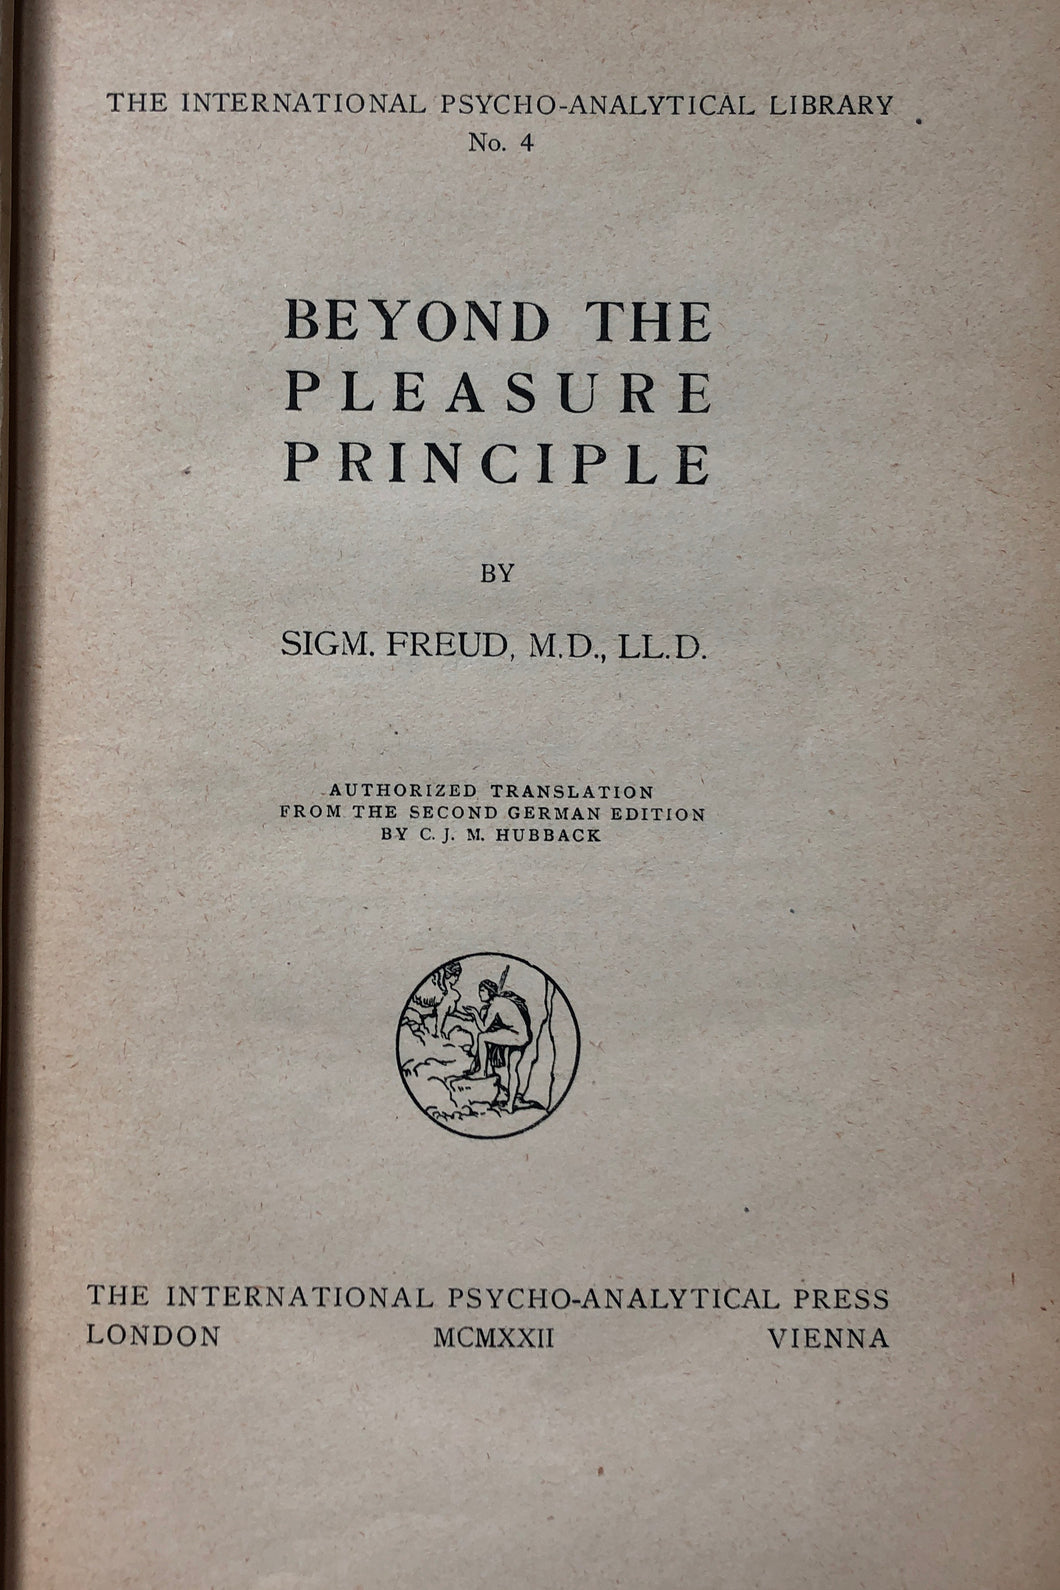 Beyond the pleasure principle, 1922